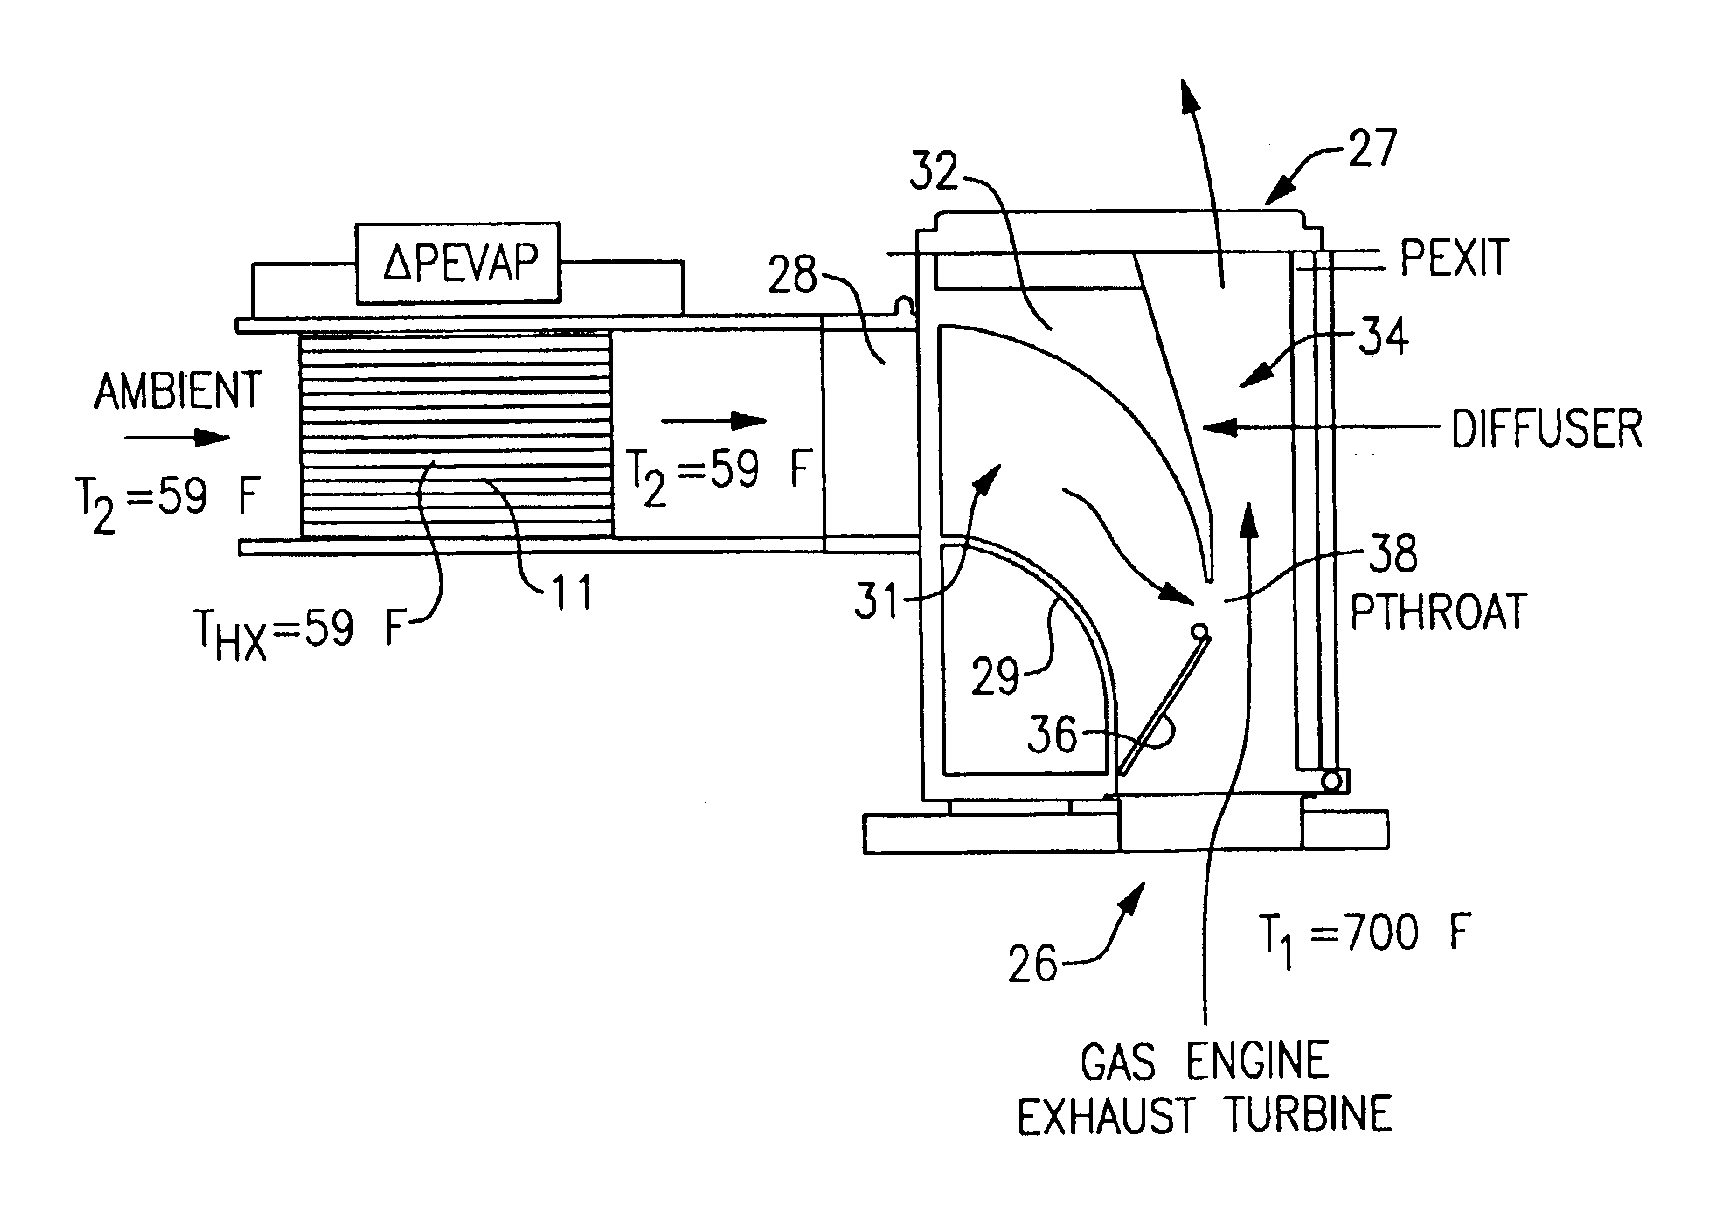 Control of flow through a vapor generator